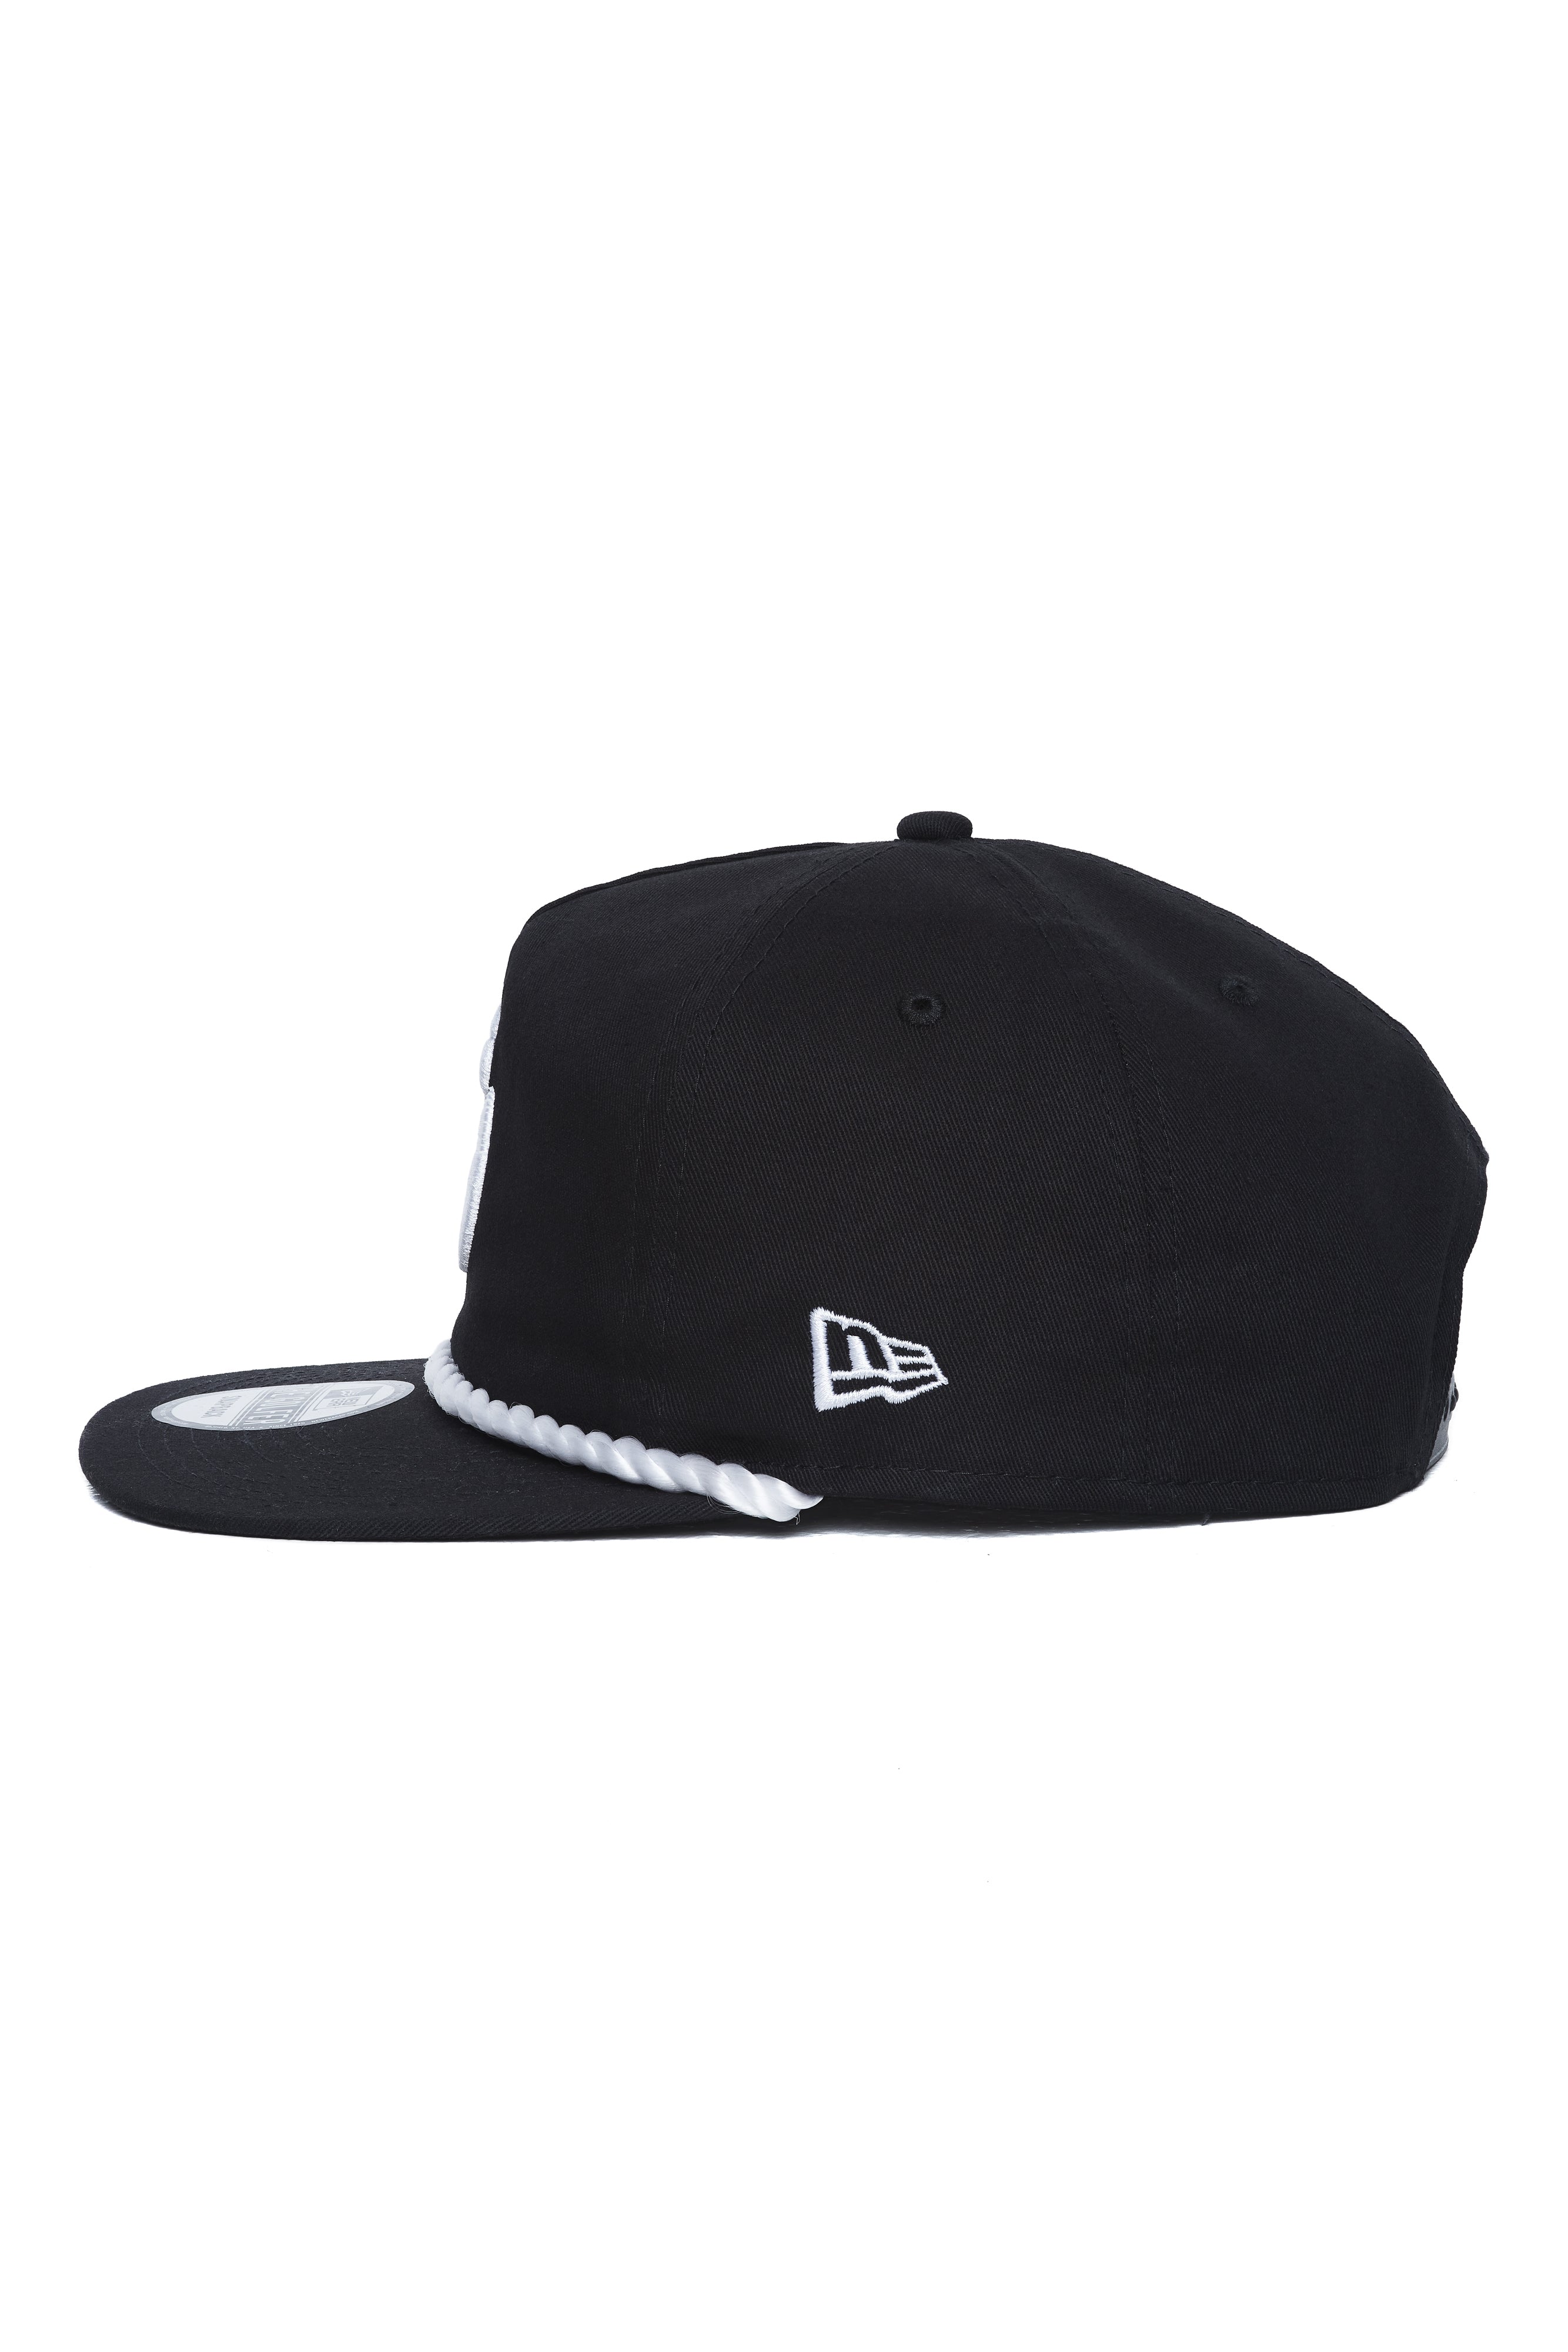 New Era BHGC Golfer Hat  - Black